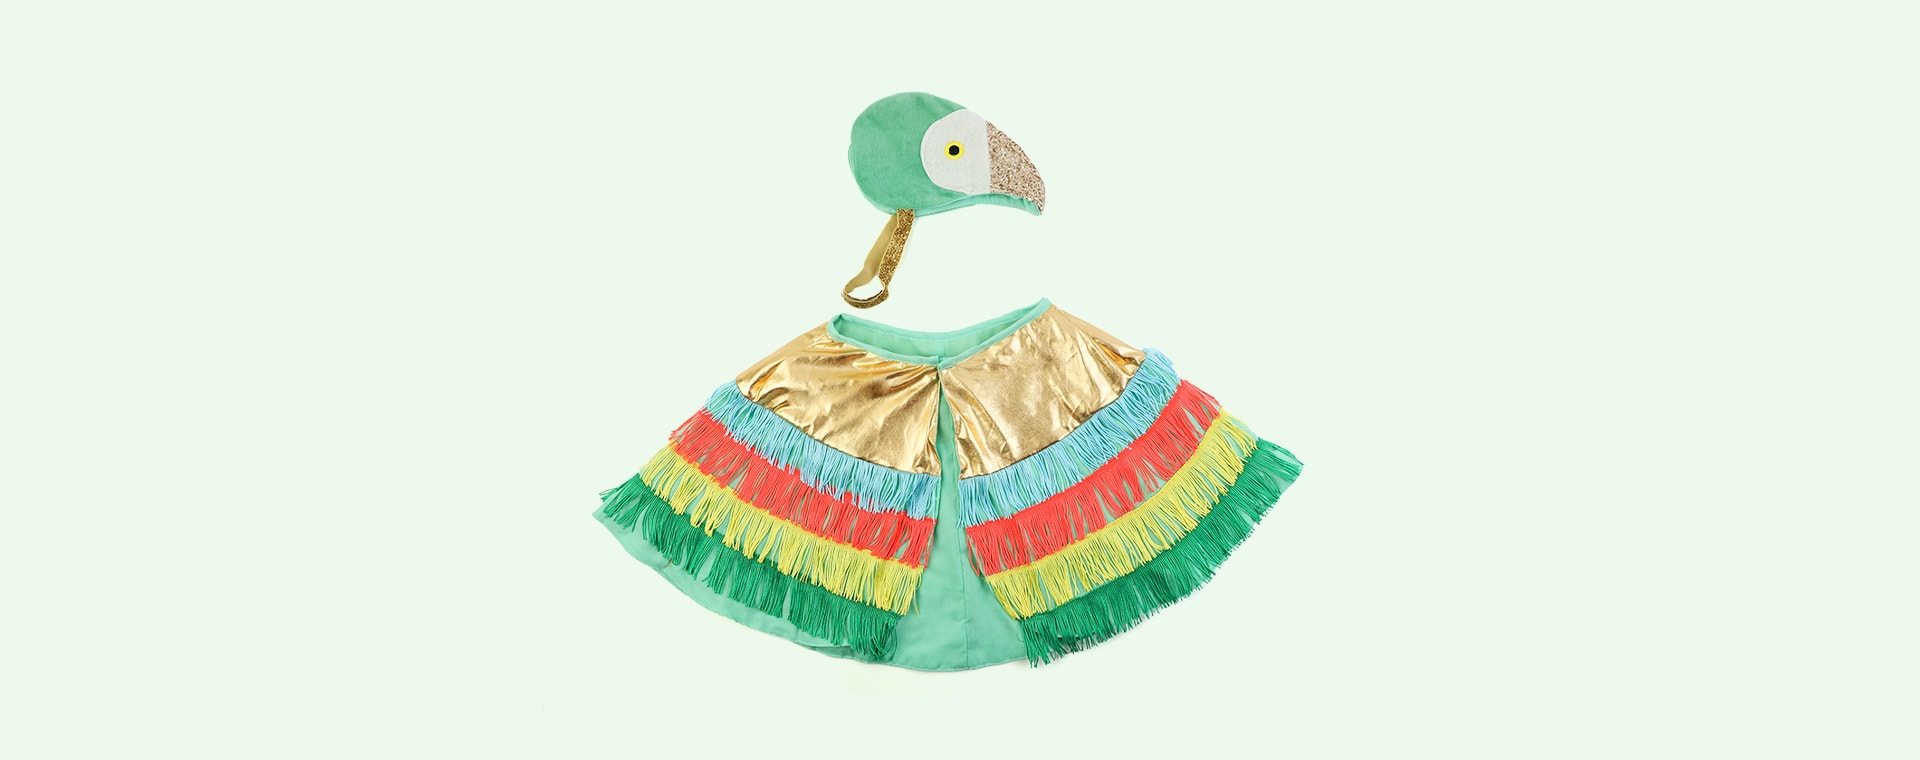 Multi Meri Meri Parrot Fringed Cape Dress up